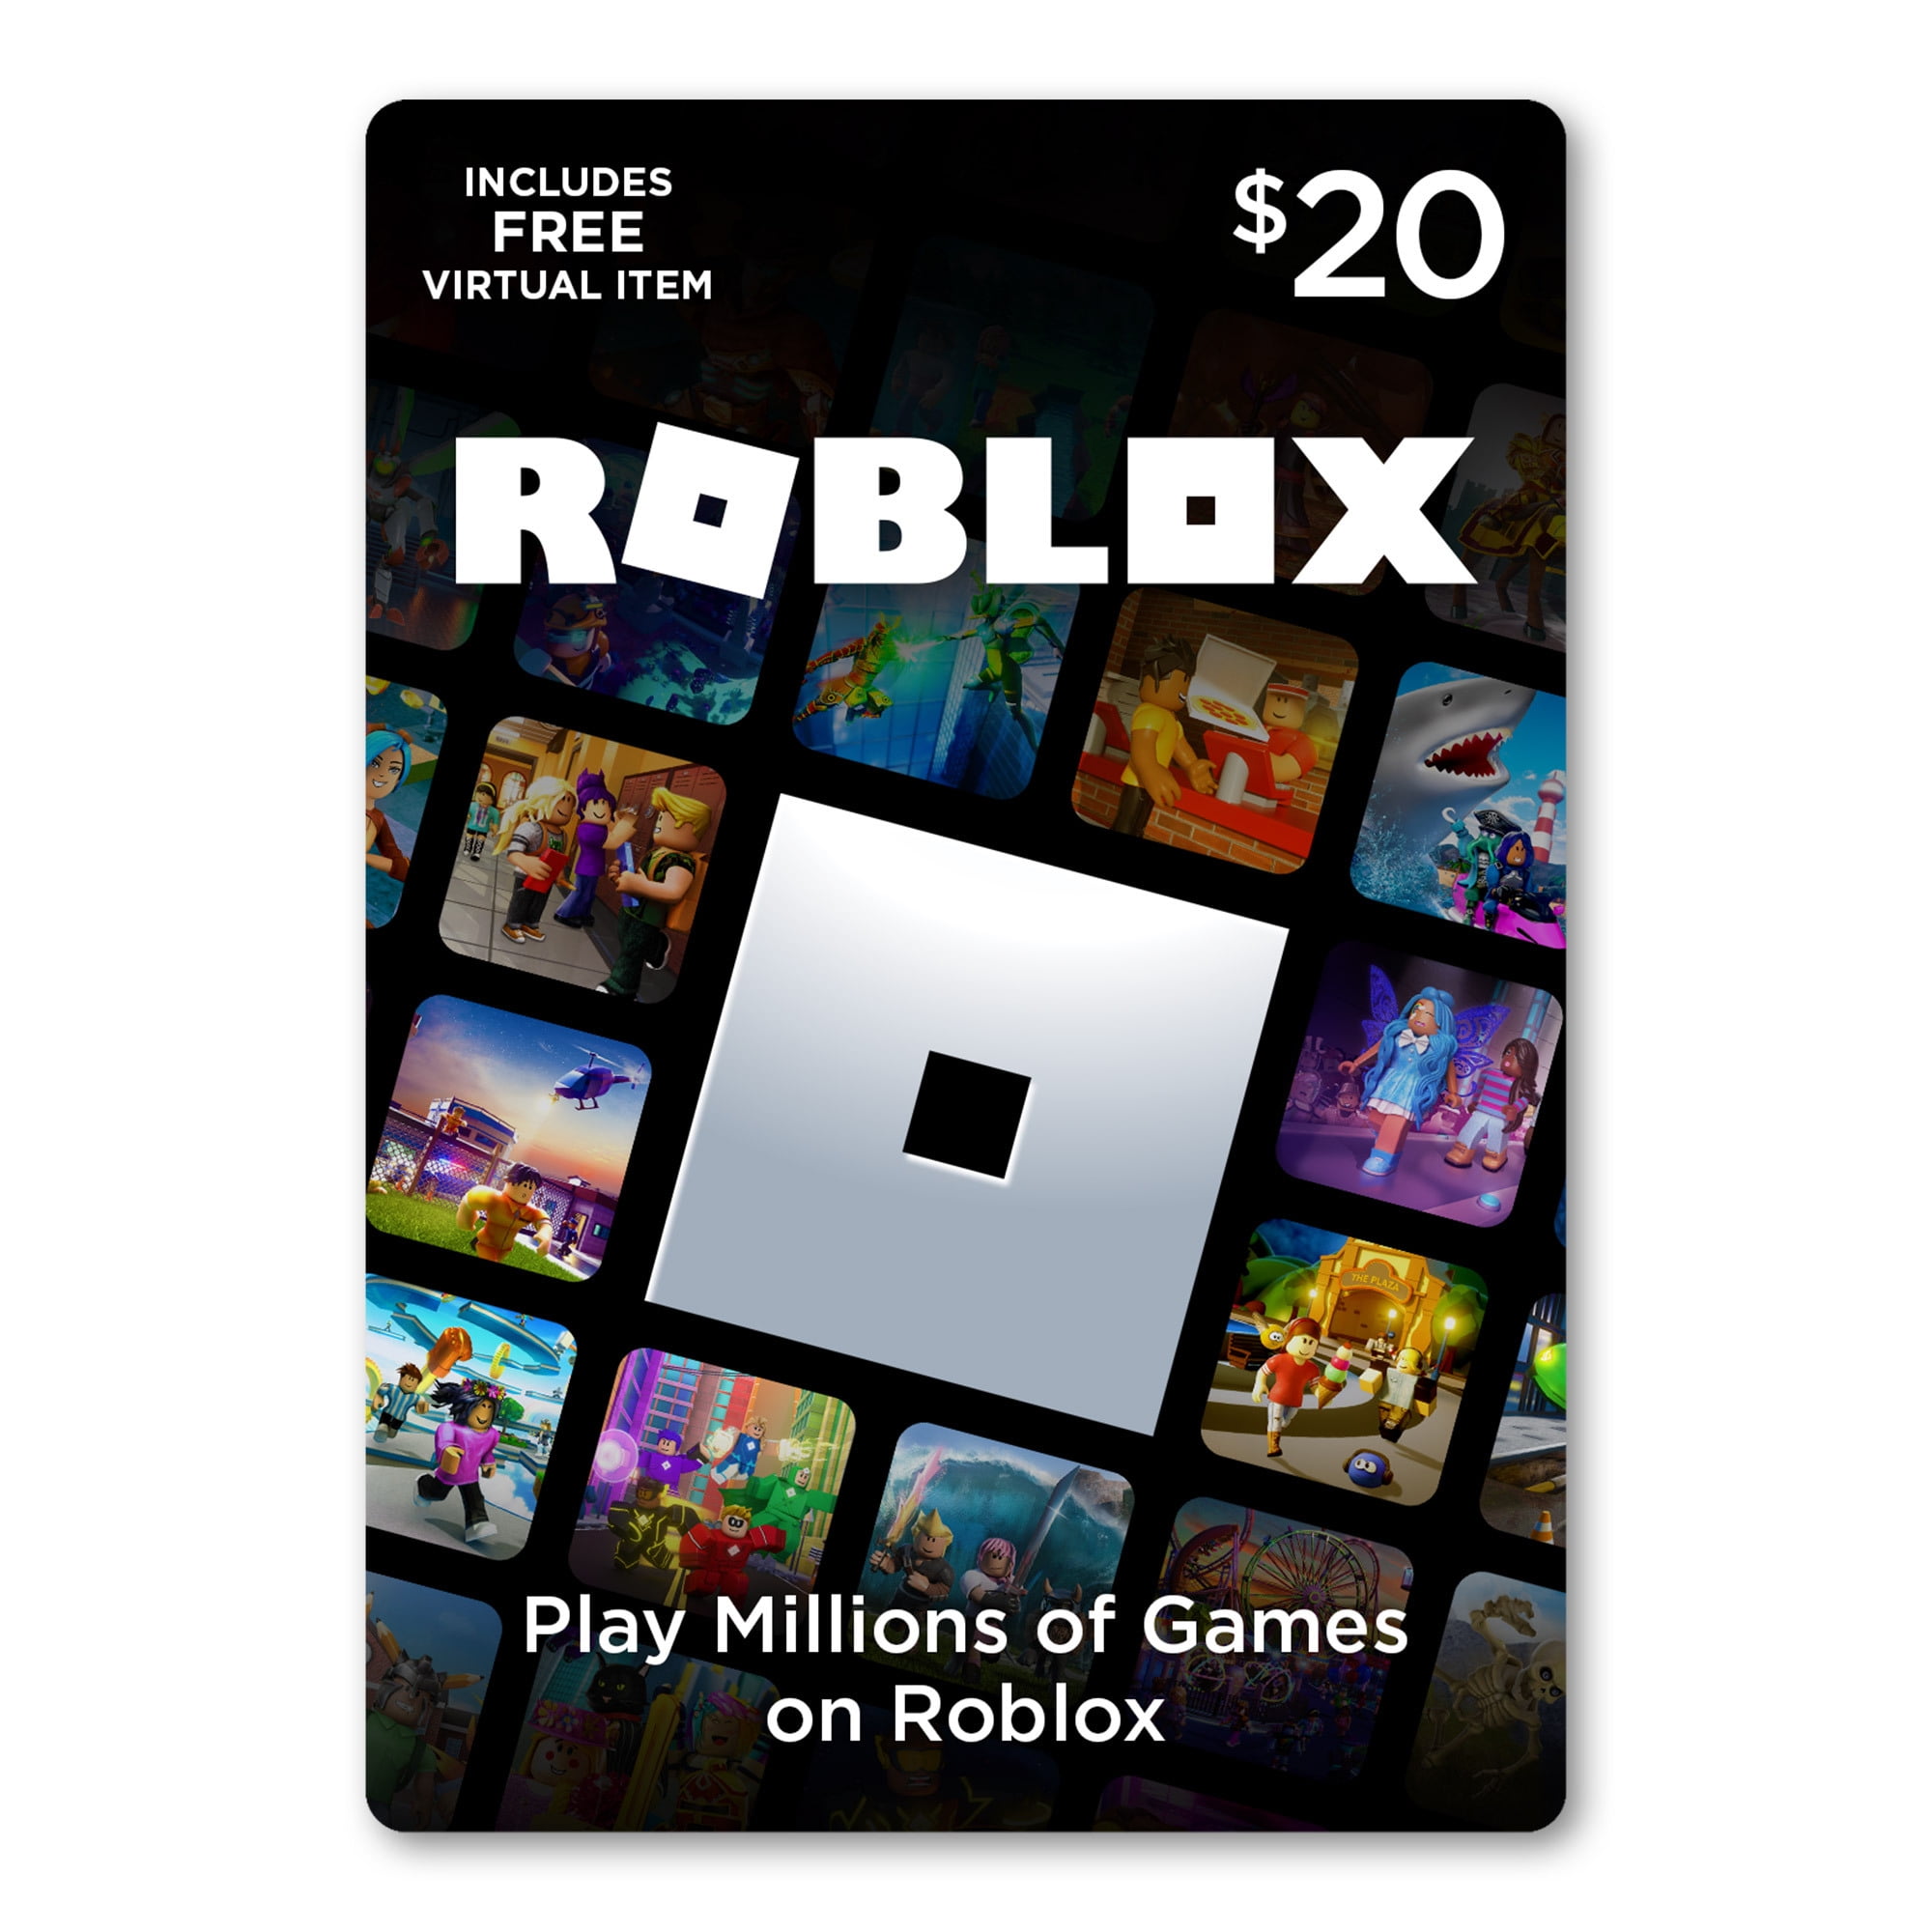 Roblox 20 Digital Gift Card Includes Exclusive Virtual Item Digital Download Walmart Com Walmart Com - do you get daily robux with roblox premium